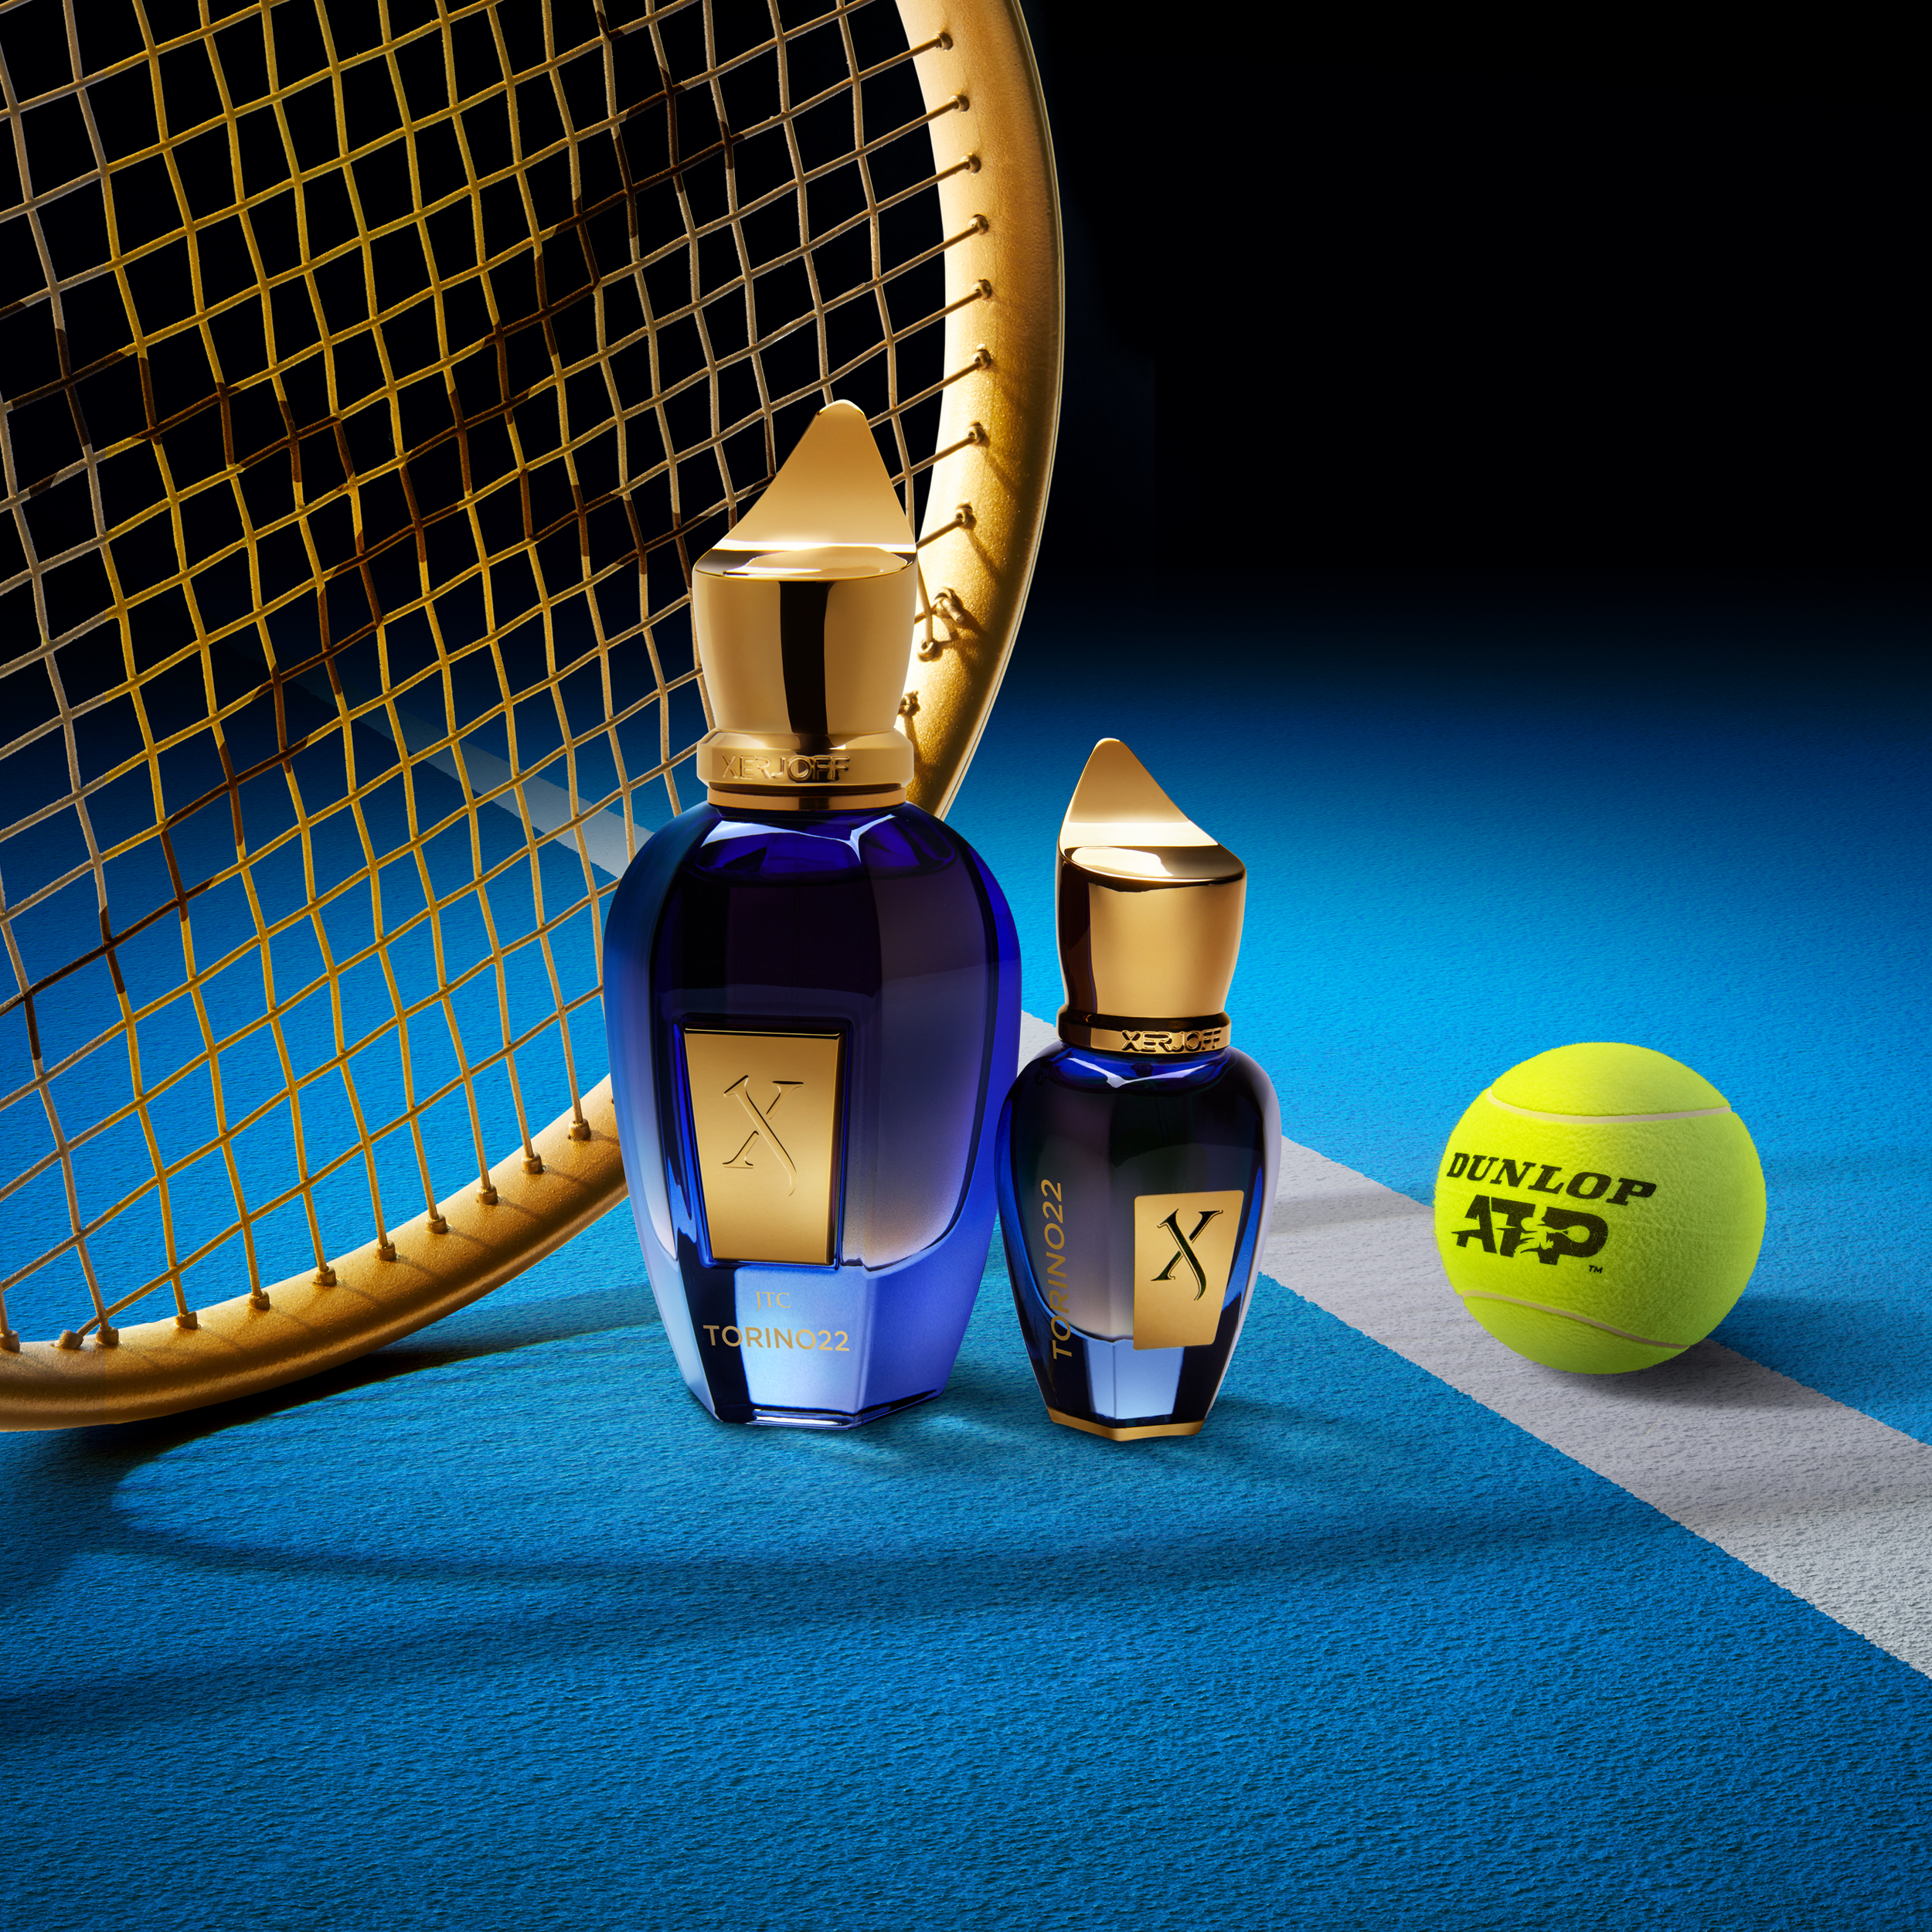 Xerjoff Torino 22 Eau De Parfum: l'omaggio esclusivo al mondo del Tennis